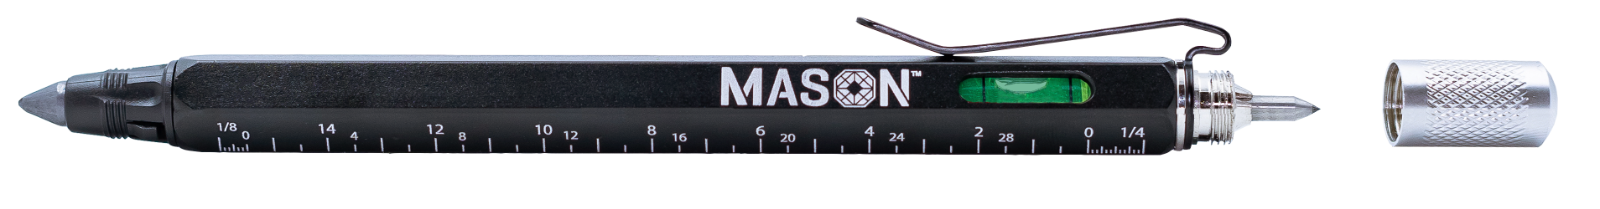 faro mason ultimate builders tool kit 59415